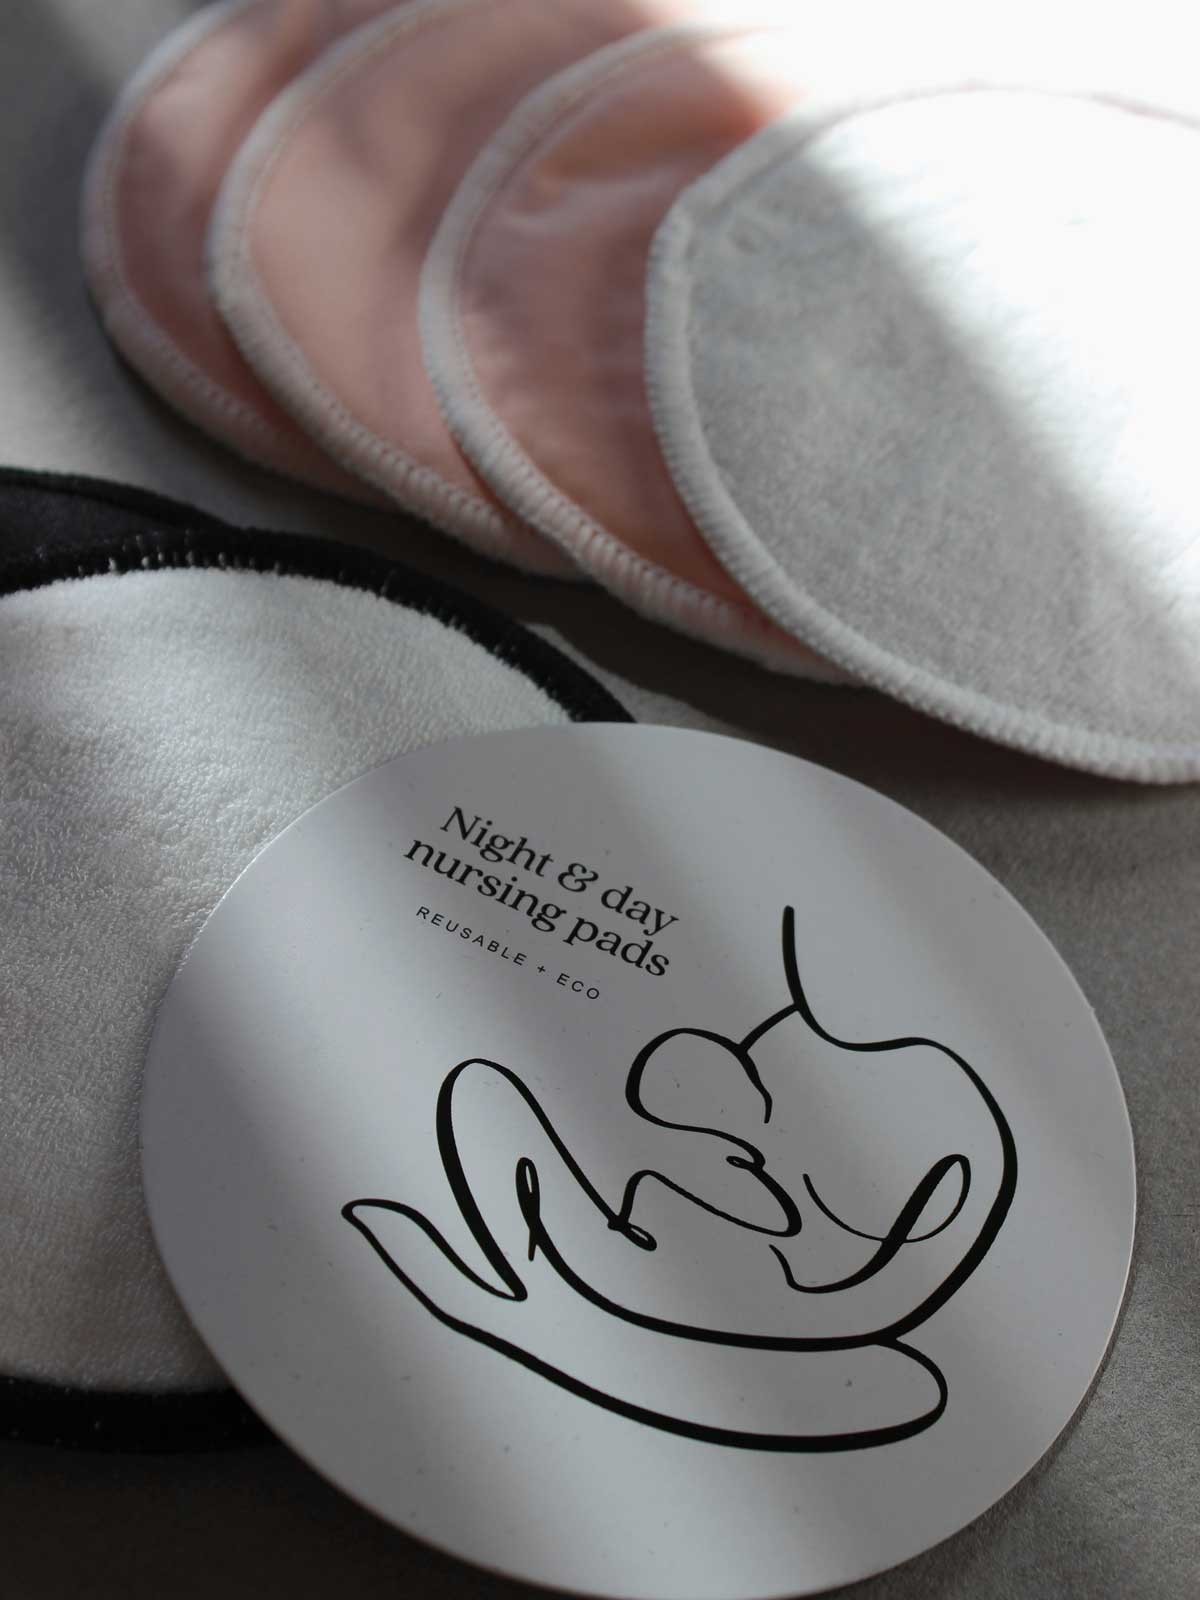 6 12 Pack Reusable Nursing Pads Leak Proof Ultra Soft Washable For  Breastfeeding Moms, Shop Now For Limited-time Deals